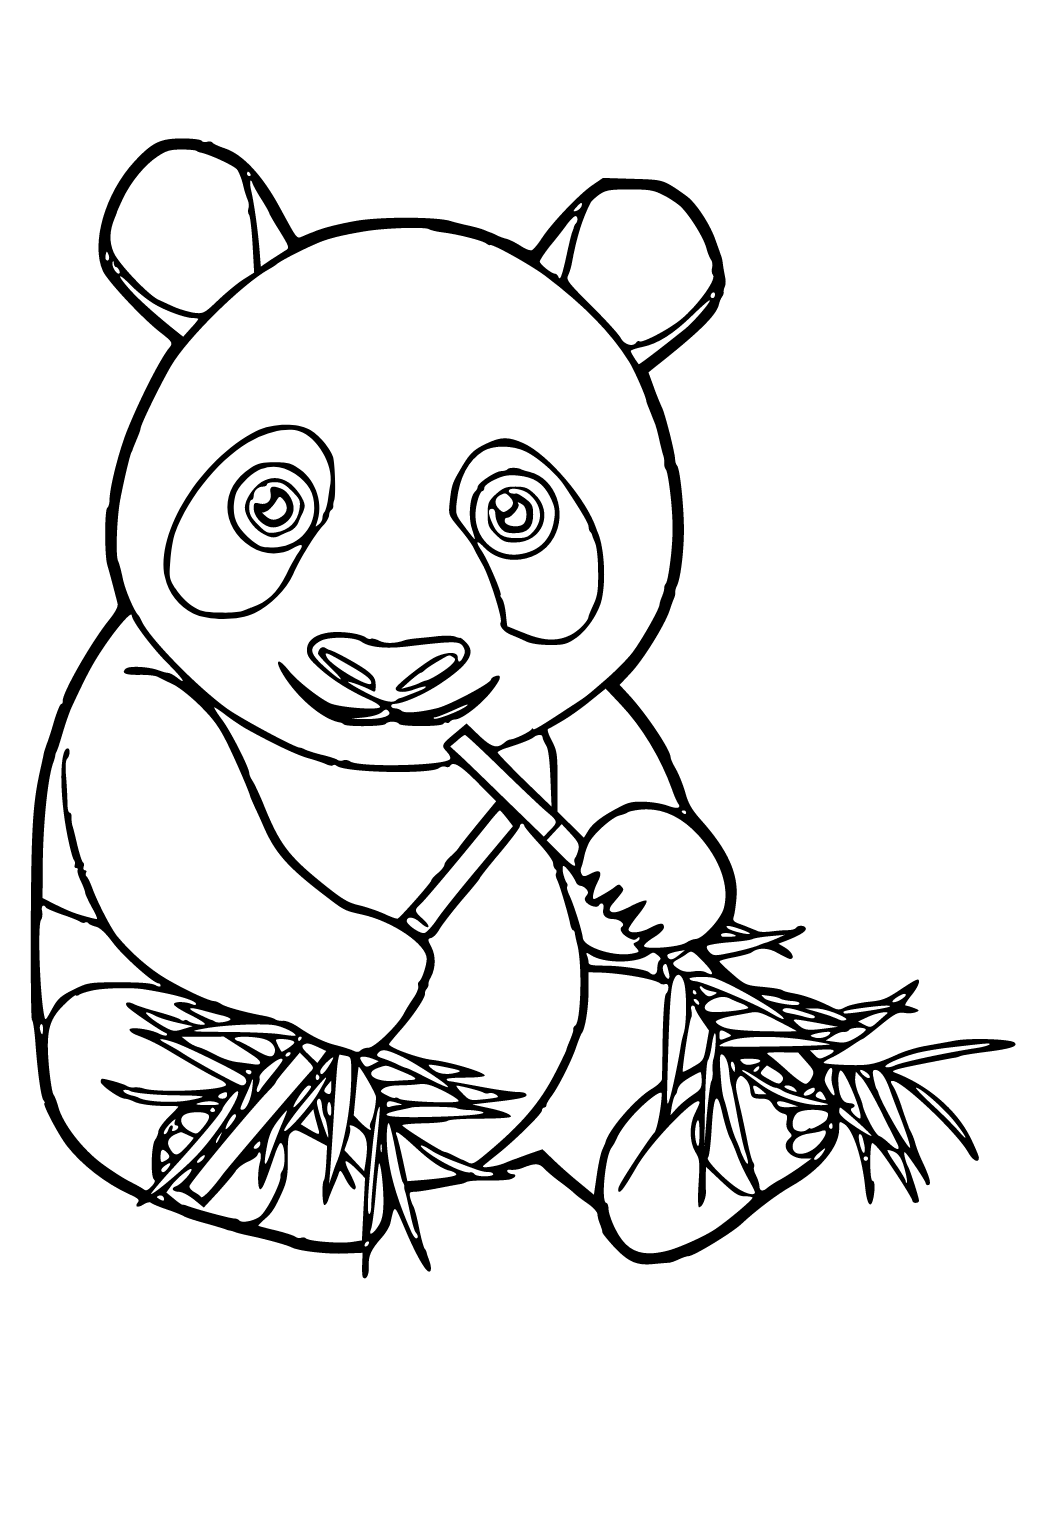 Panda para imprimir e colorir - Imprimir Desenhos